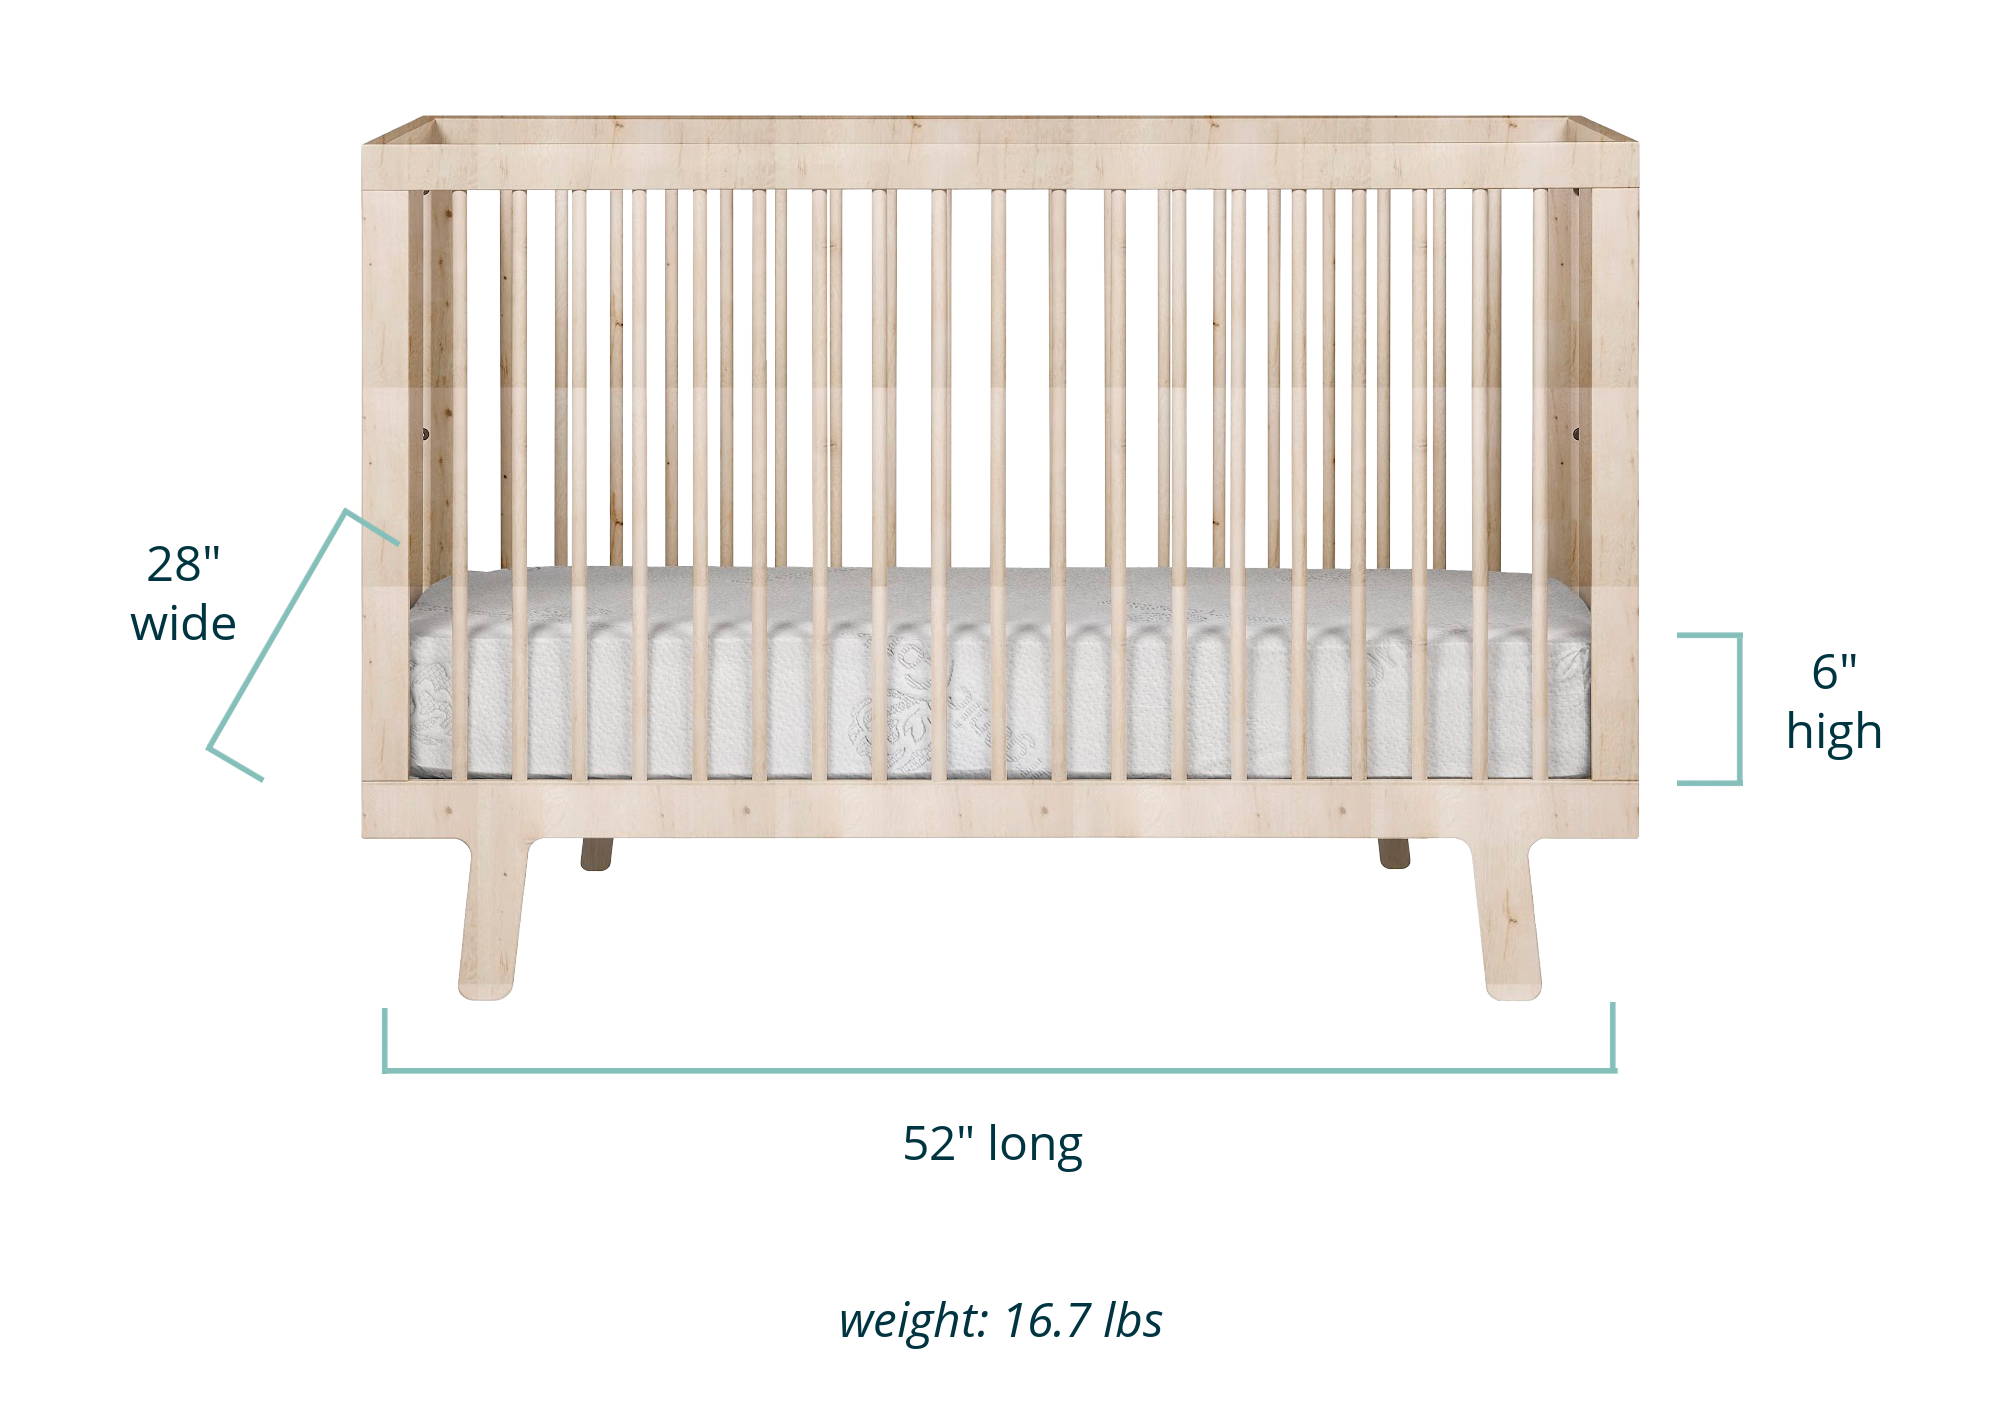 Organic Hybrid Support II crib mattress in a crib showing dimensions of 28